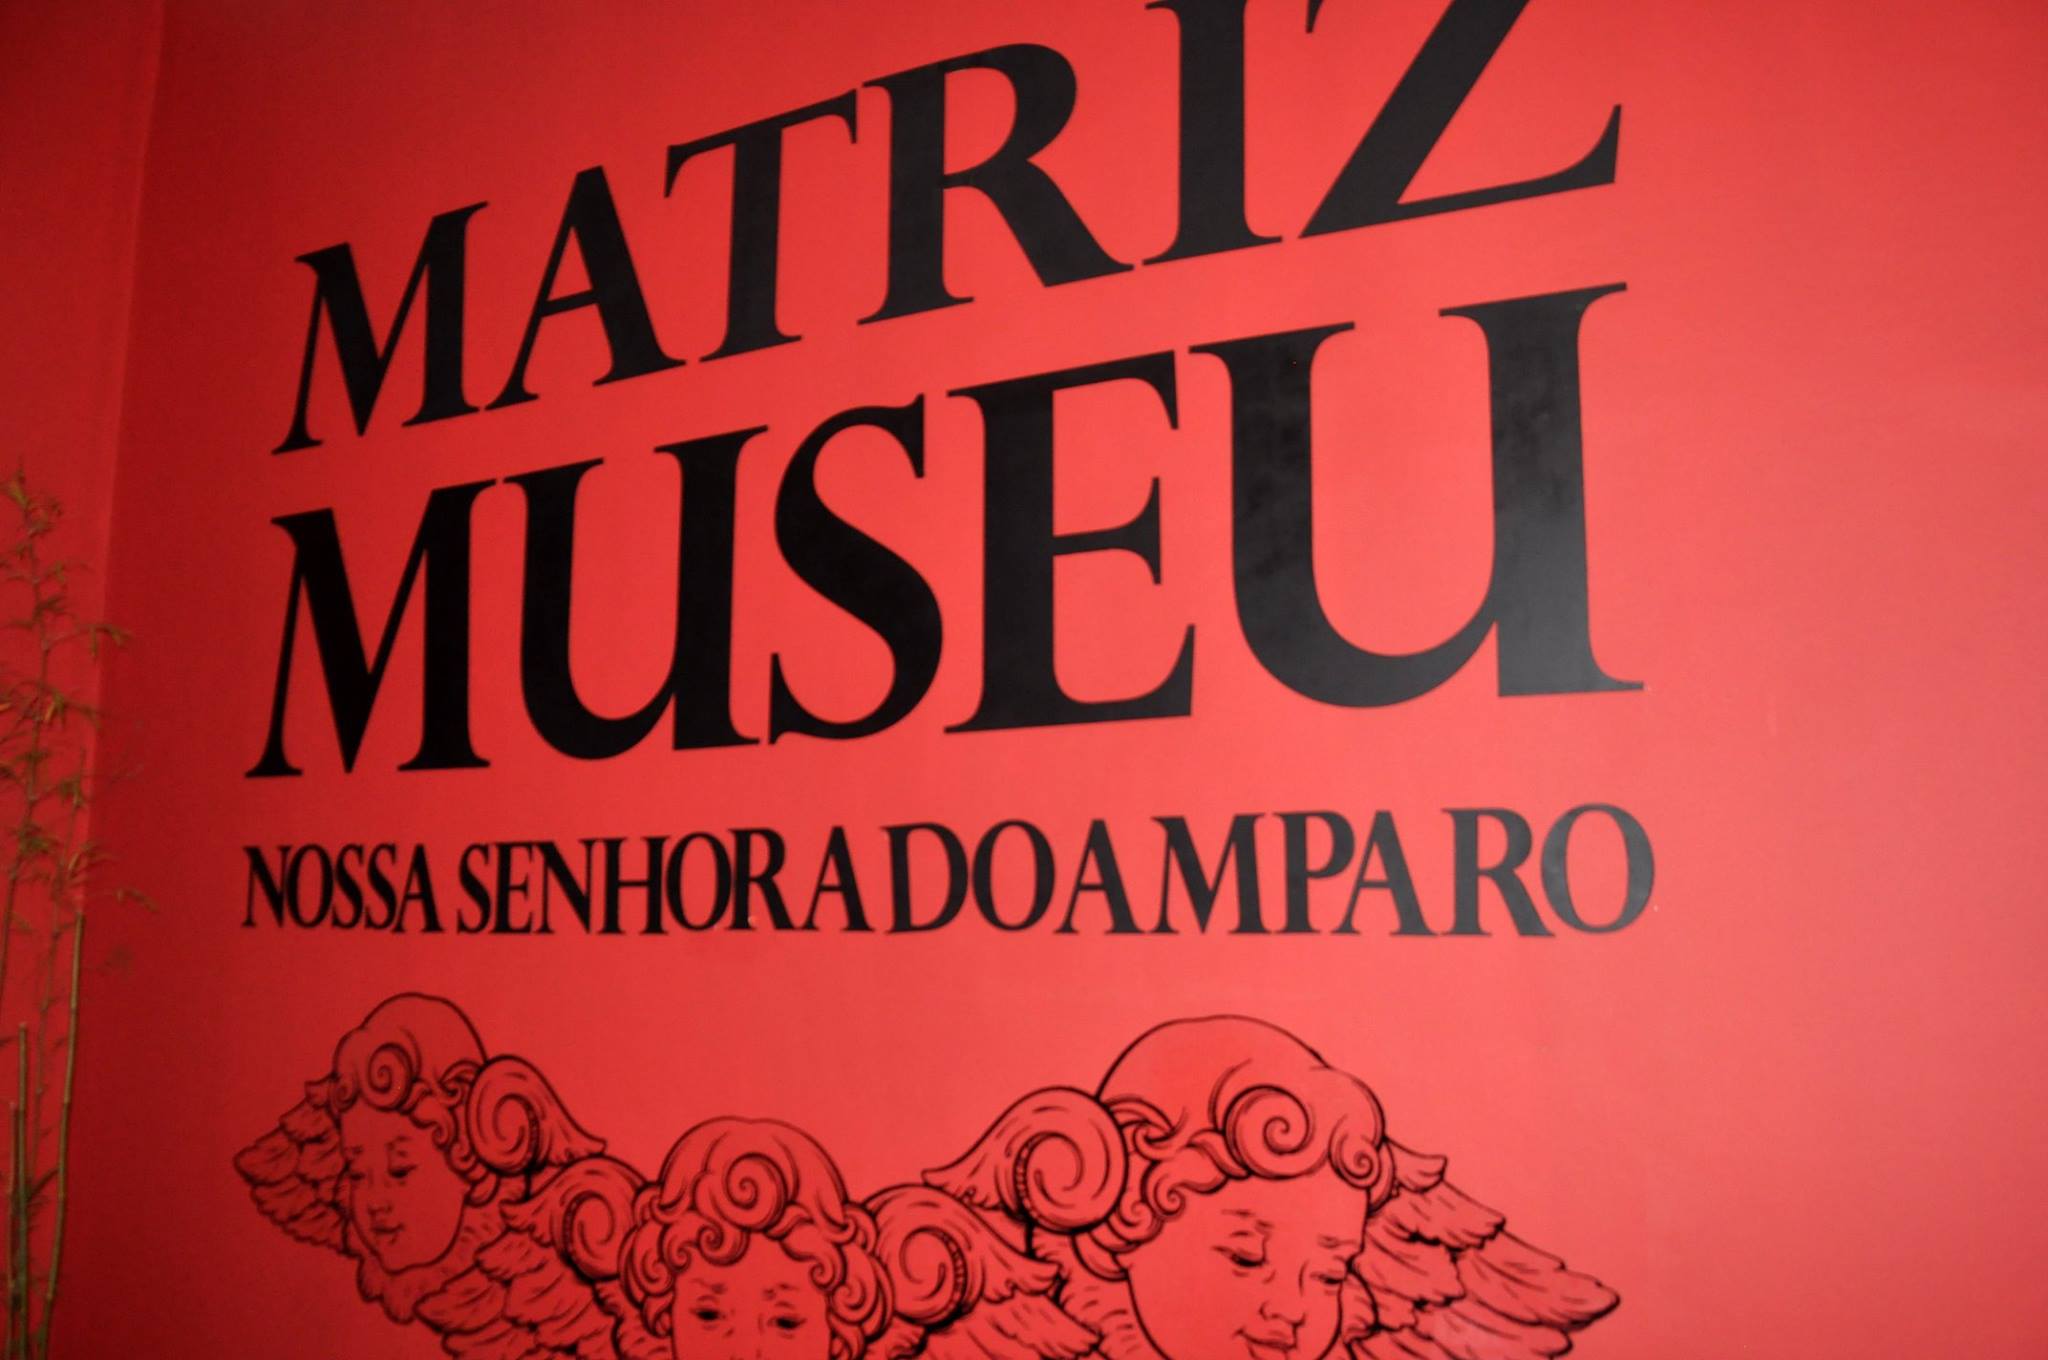 Matriz Museu